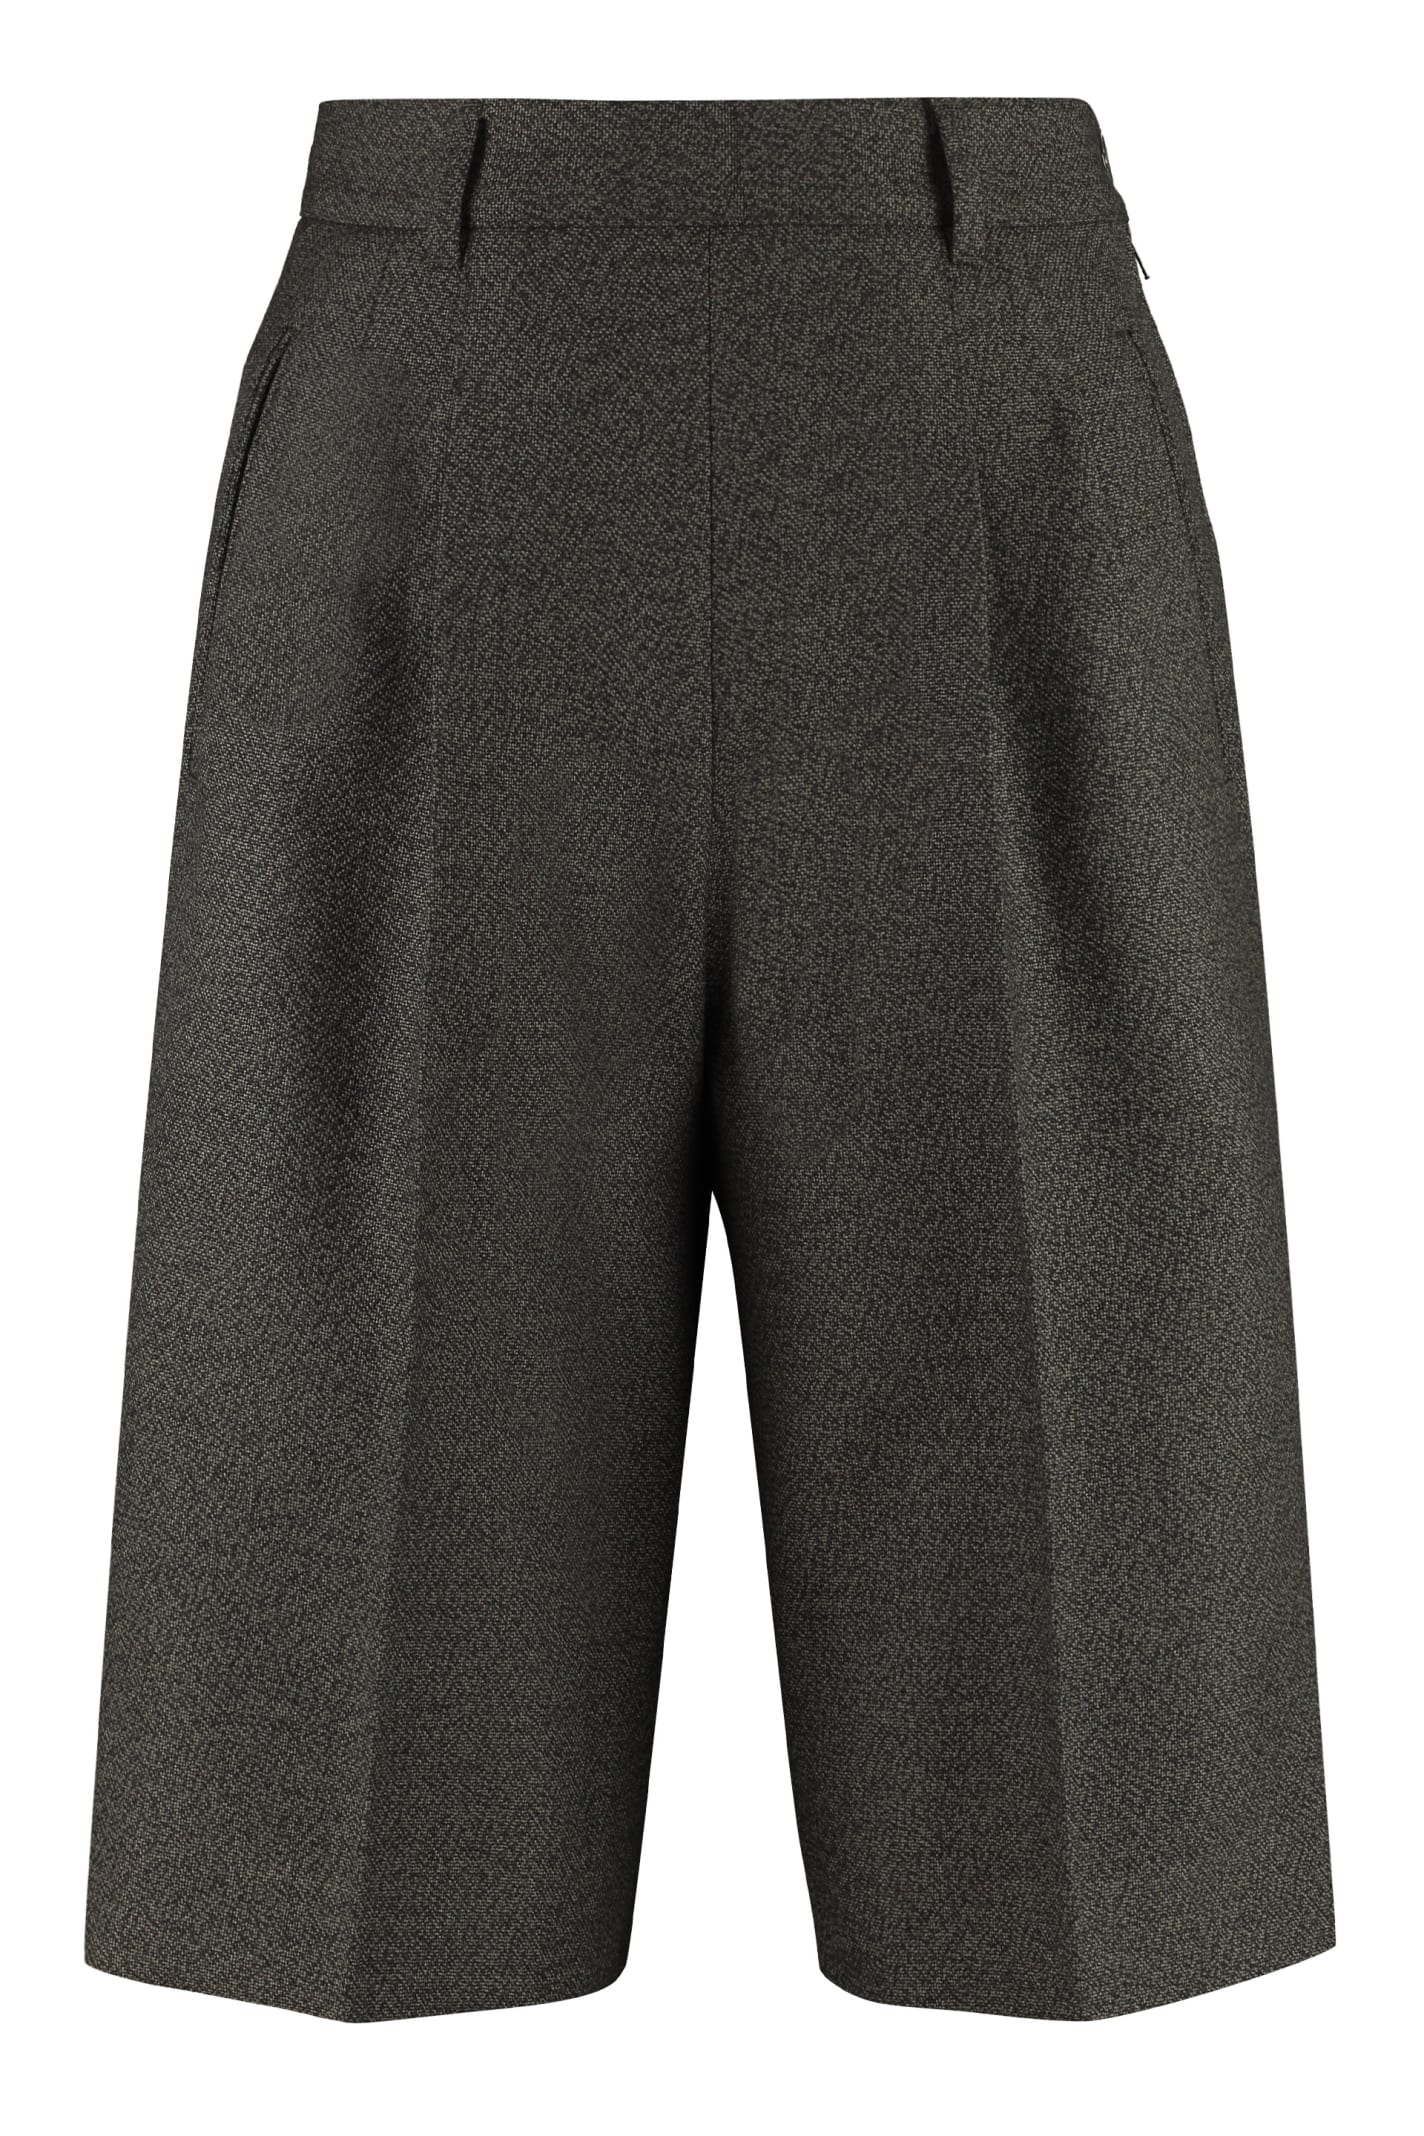 Maison Margiela Wool Bermuda-shorts